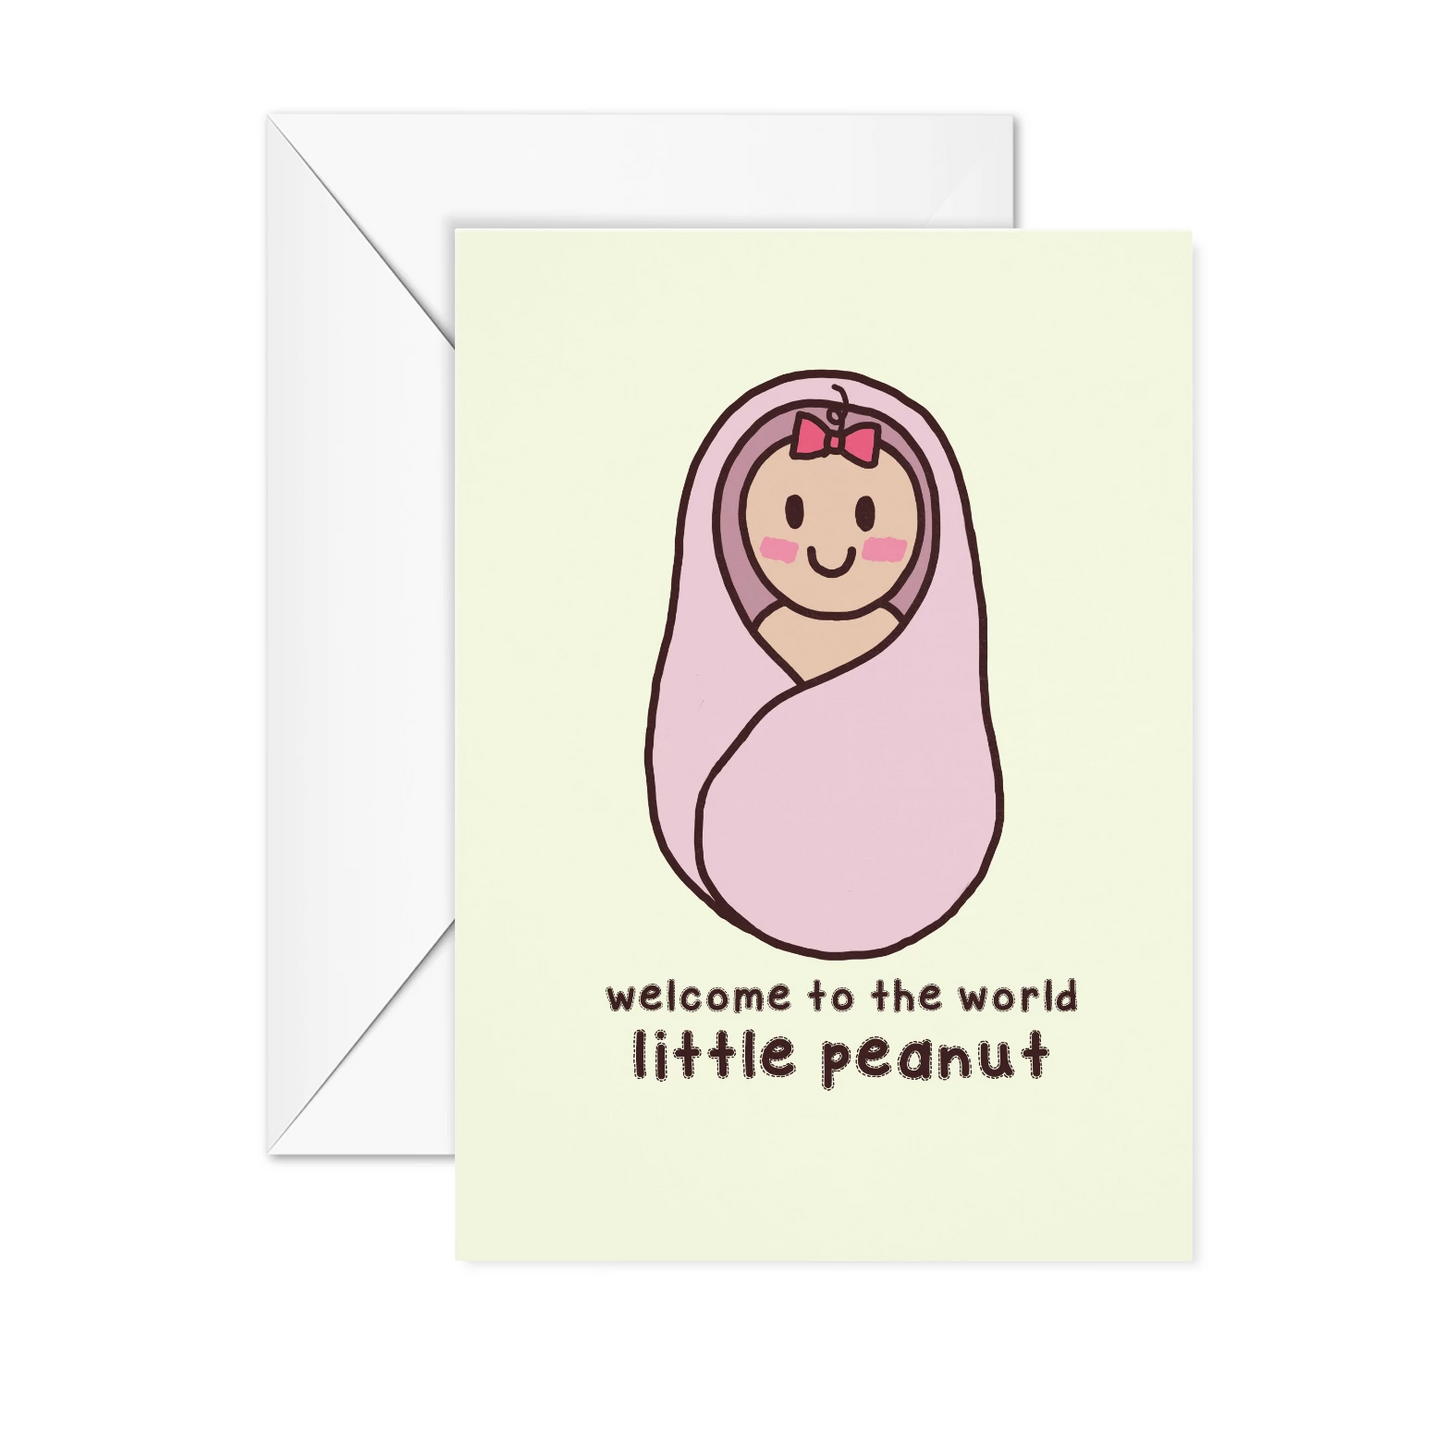 New Baby Girl Card